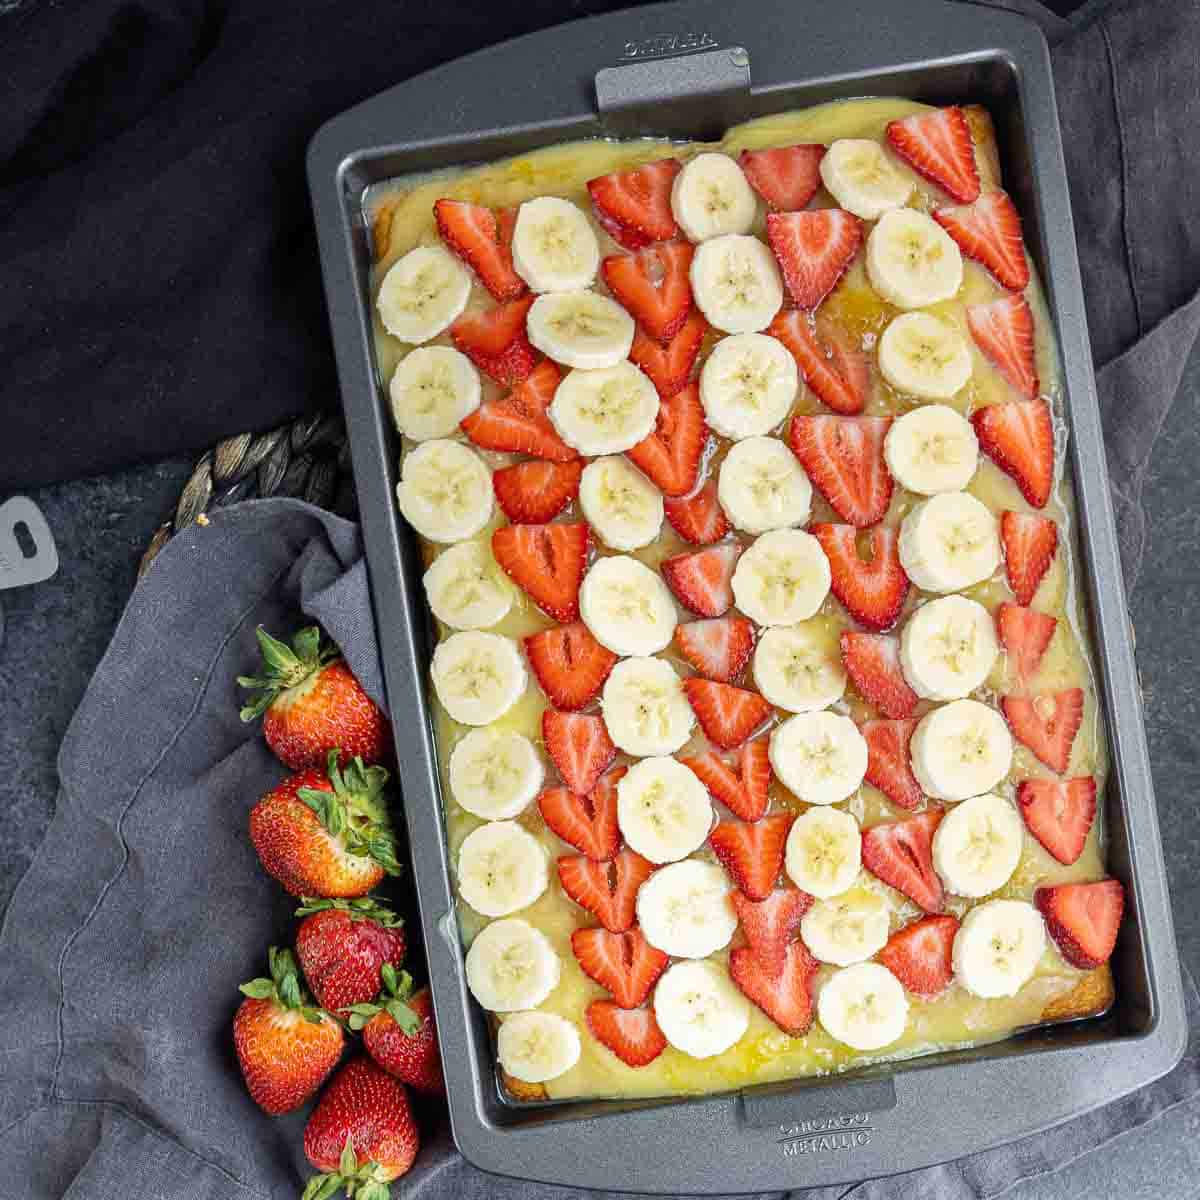 strawberries and banana sliced in rows on top of Banana Split Cake